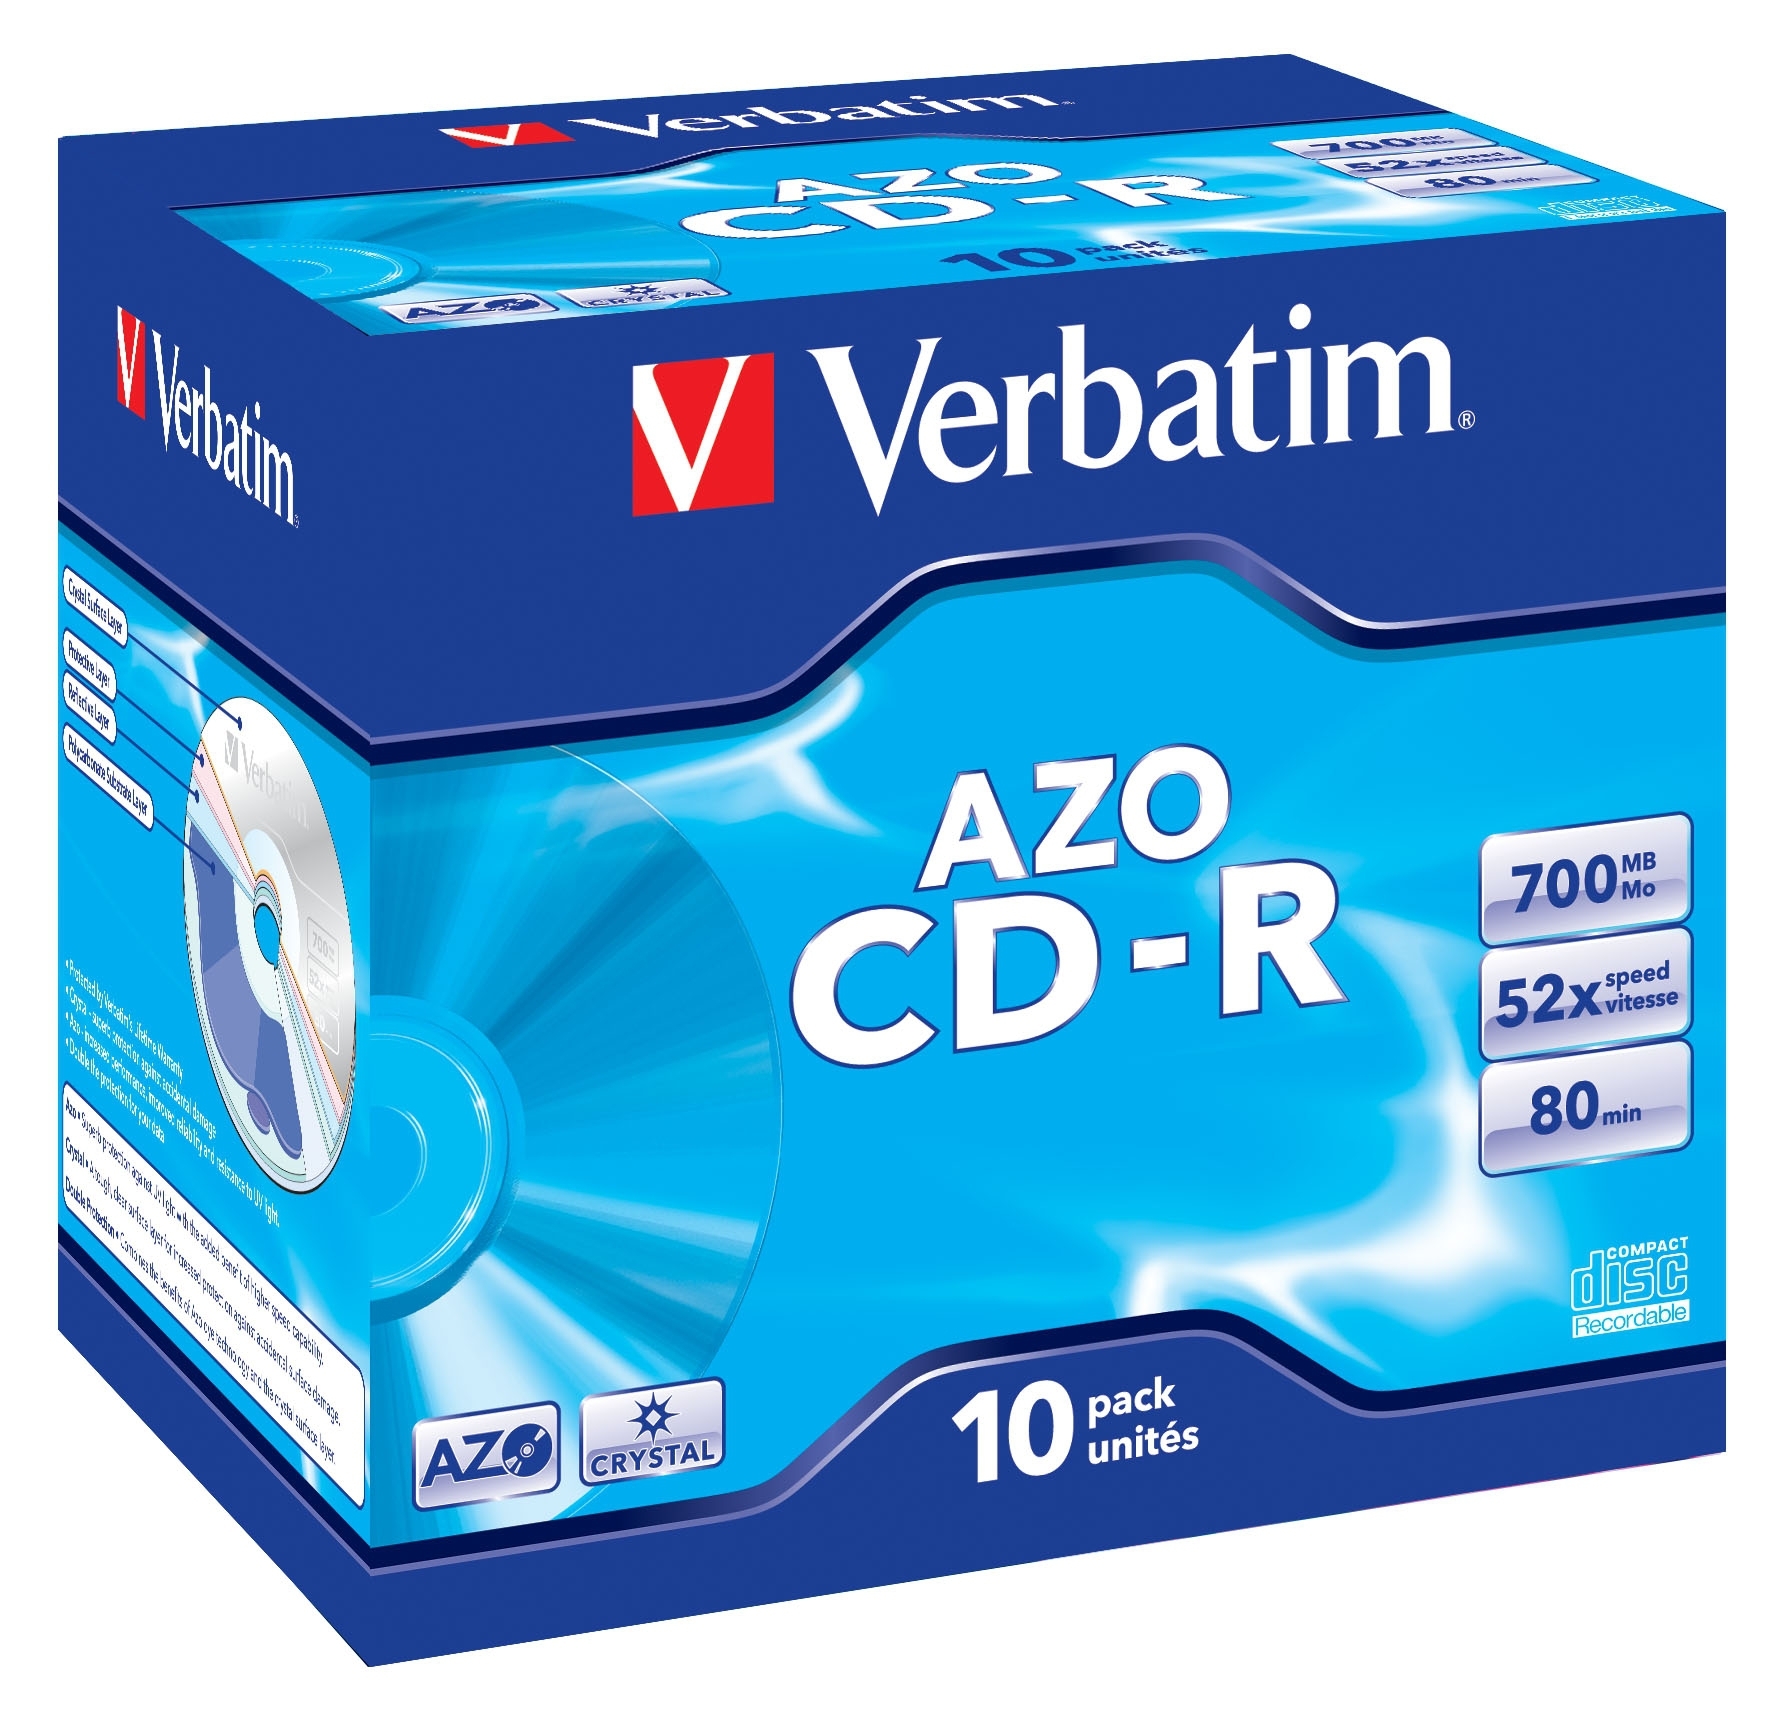 Verbatim CD-R AZO Crystal